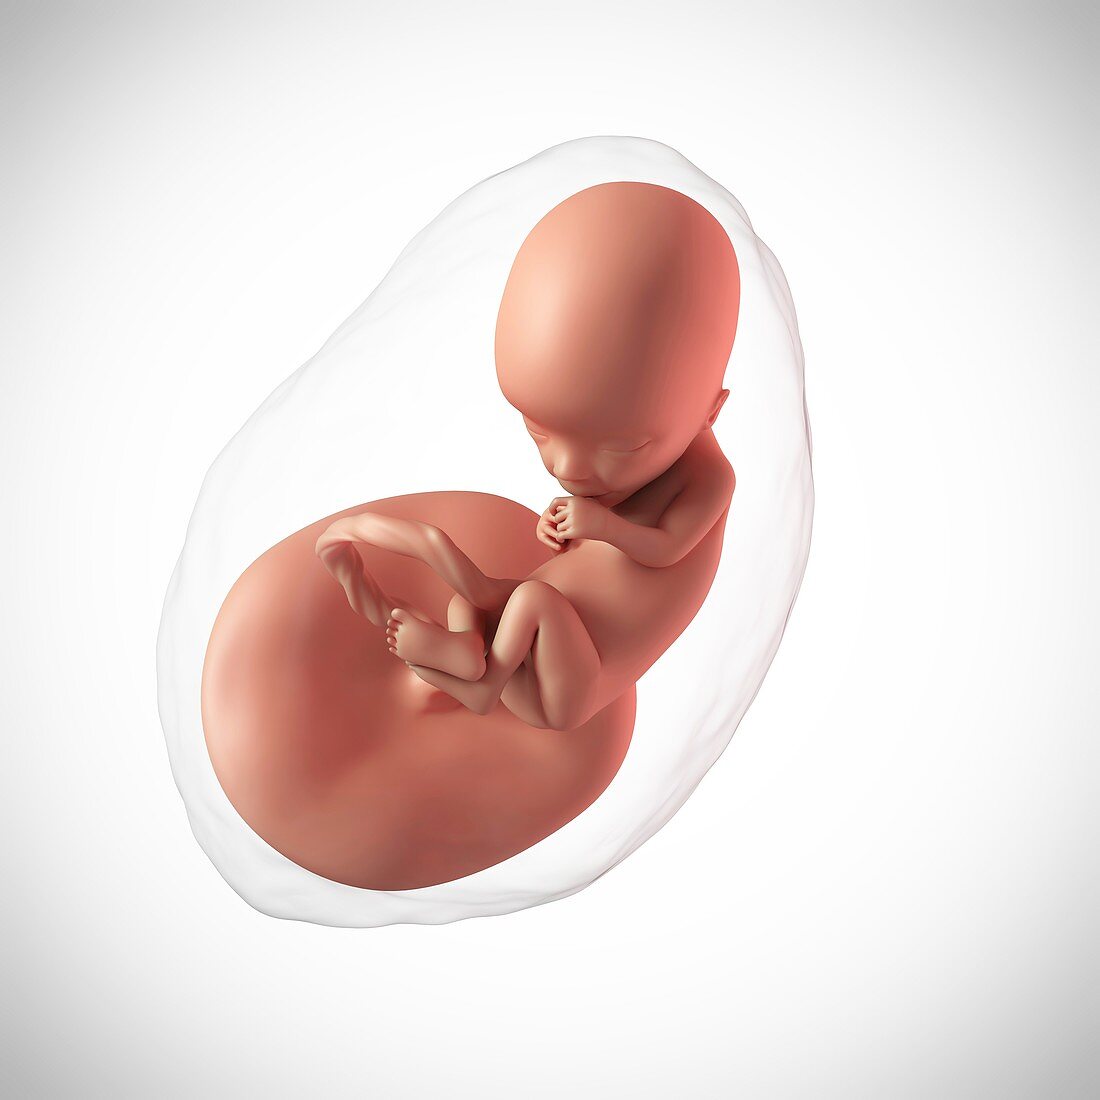 Human fetus age 13 weeks